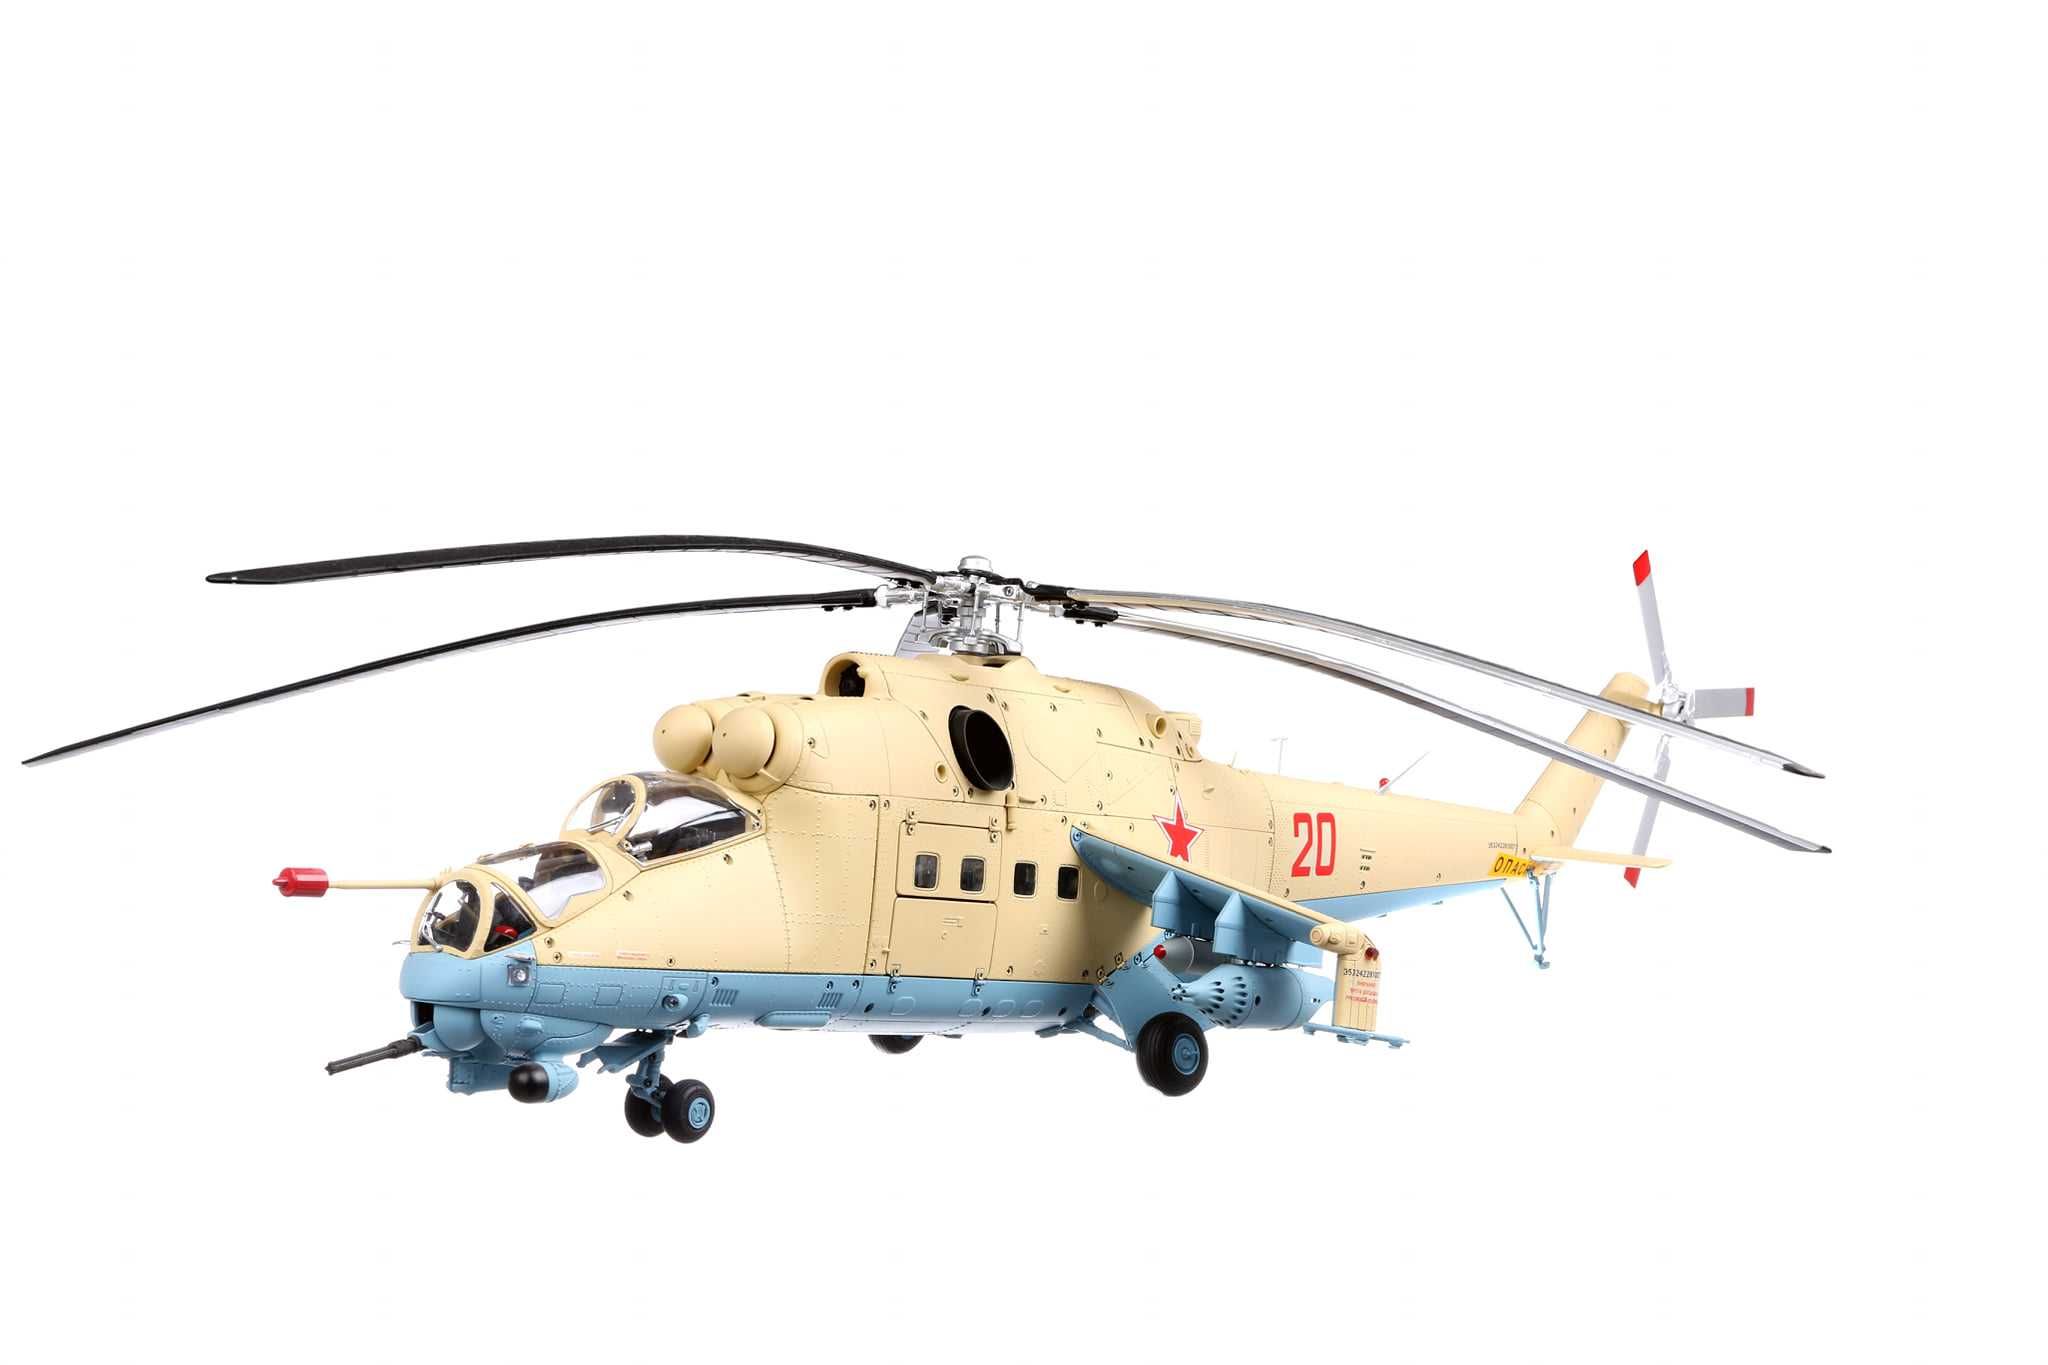 Vand macheta elicopter MIL MI-24V la scara 1/24 construit / functional